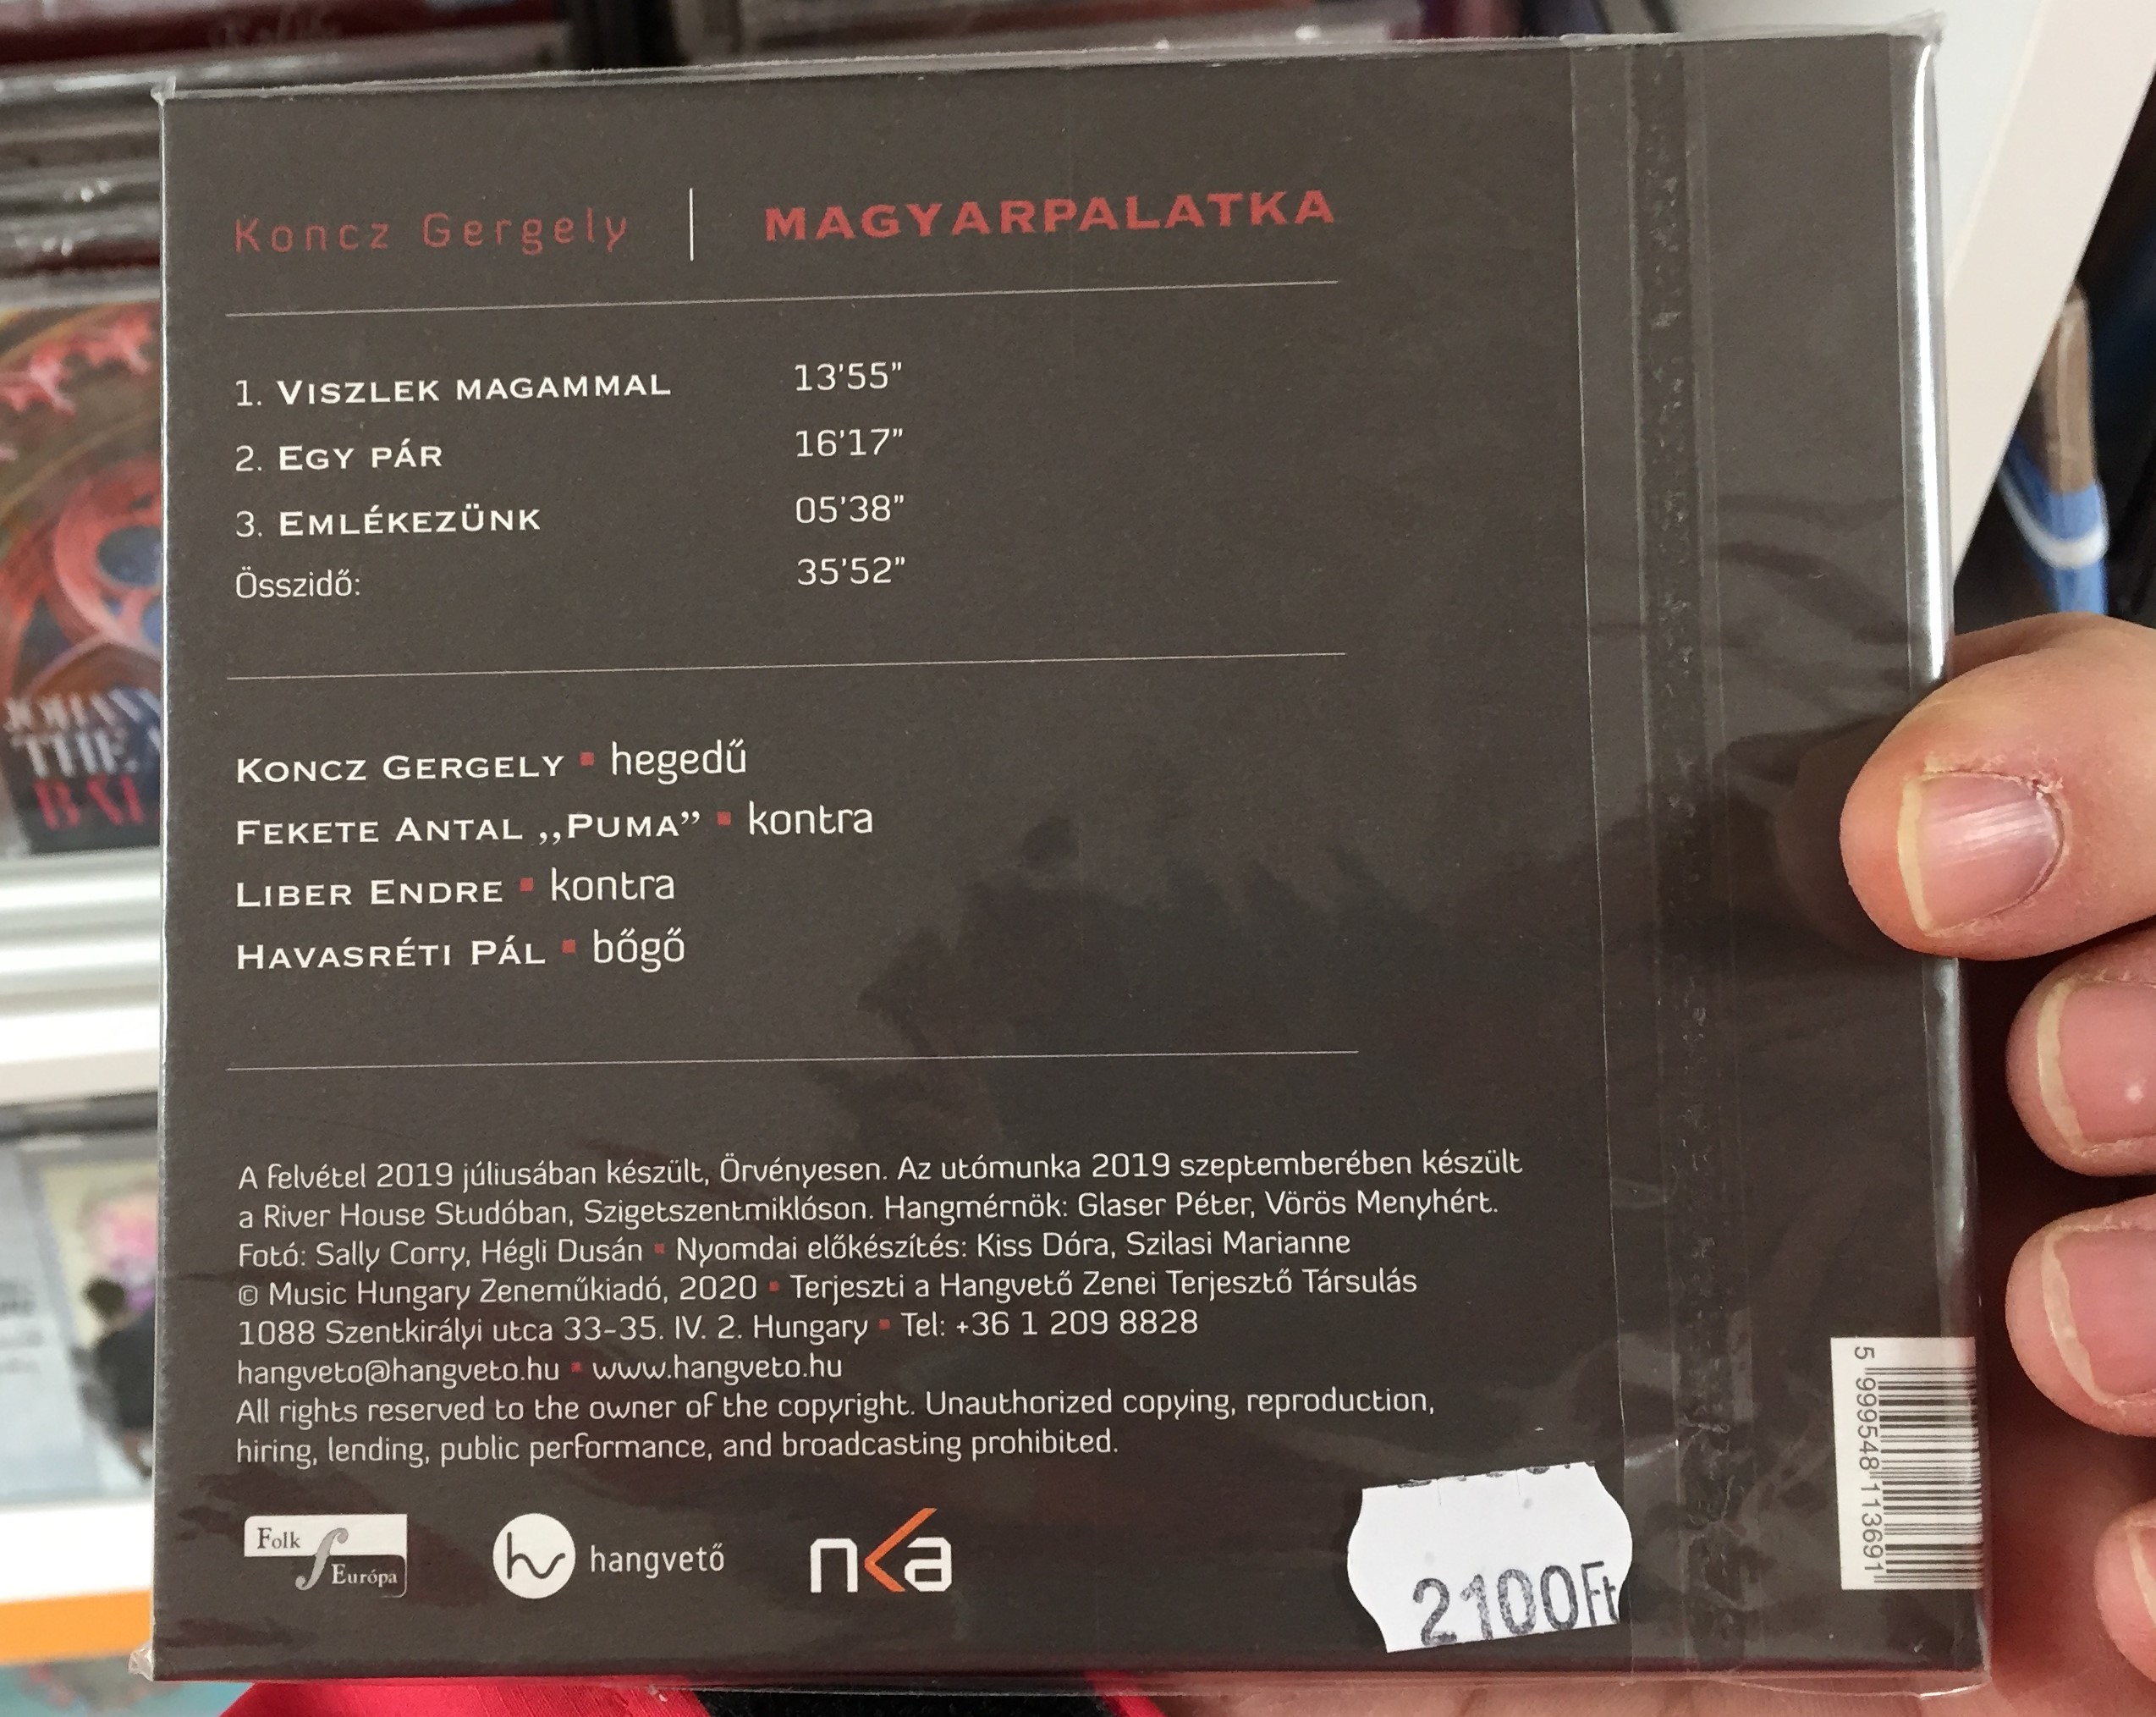 koncz-gergely-magyar-palatka-music-hungary-zenemukiado-audio-cd-2020-5999548113691-2-.jpg